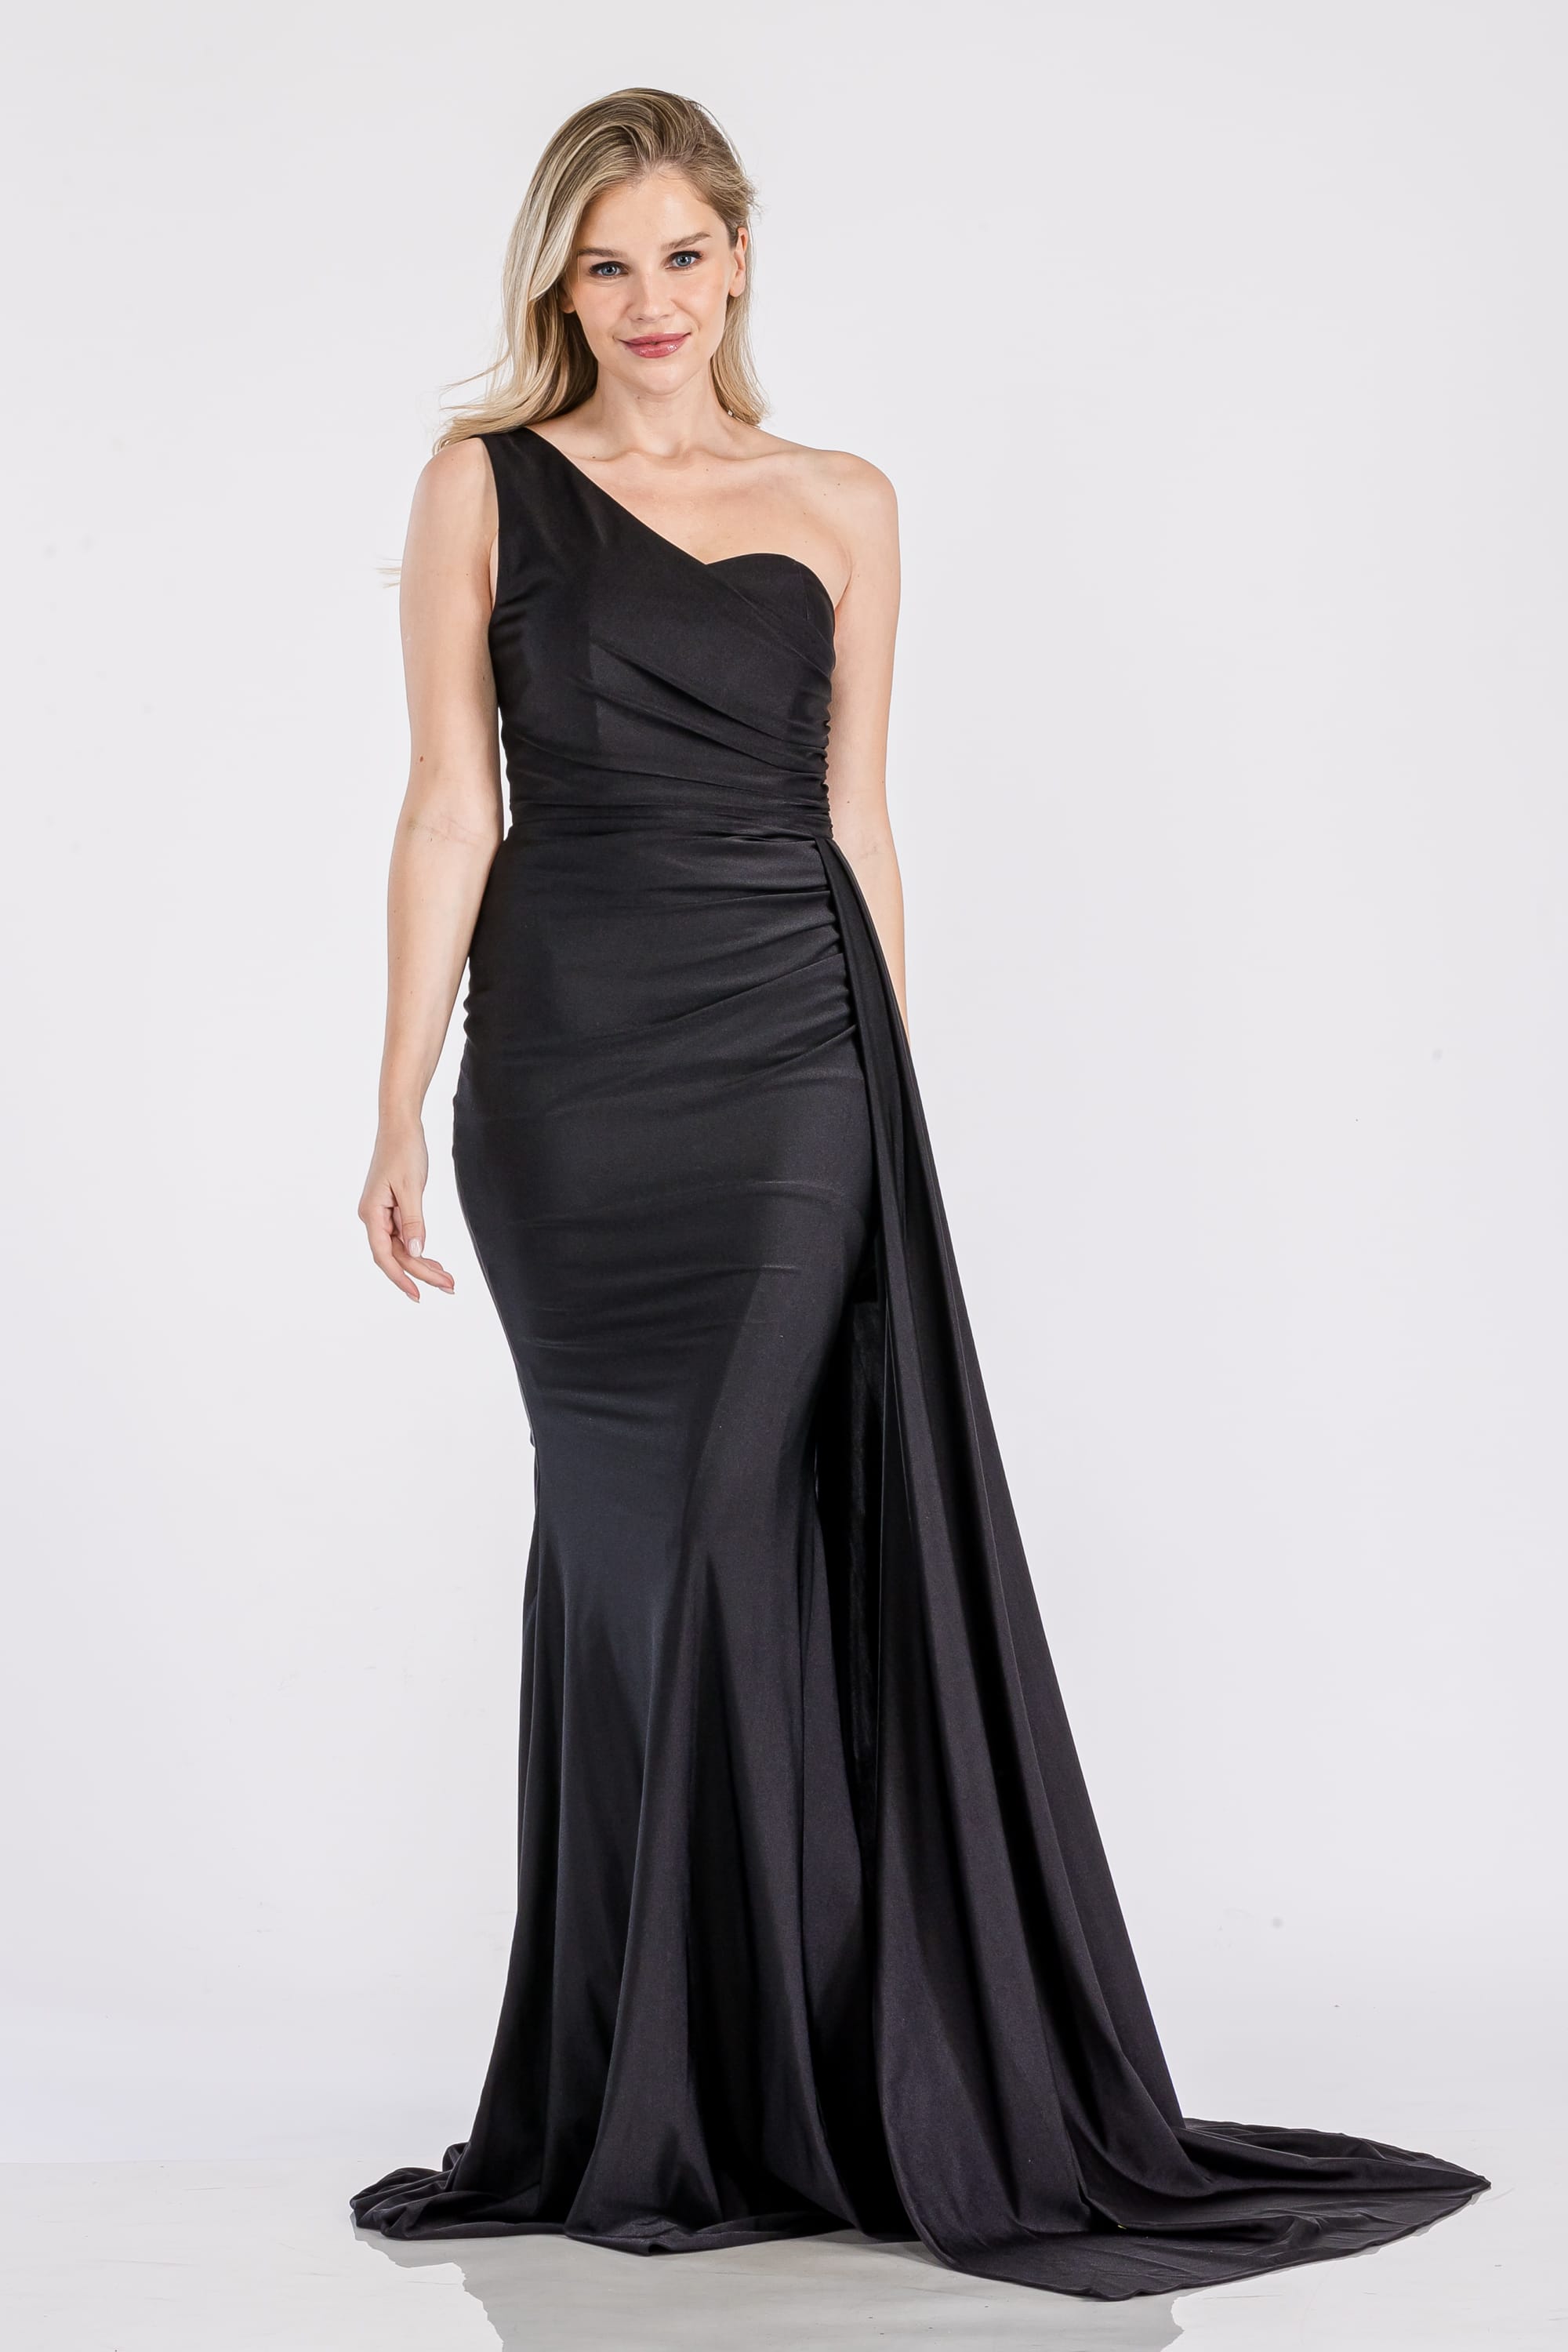 Prima Dress -SA502383 One Shoulder Strech Sheath Dress